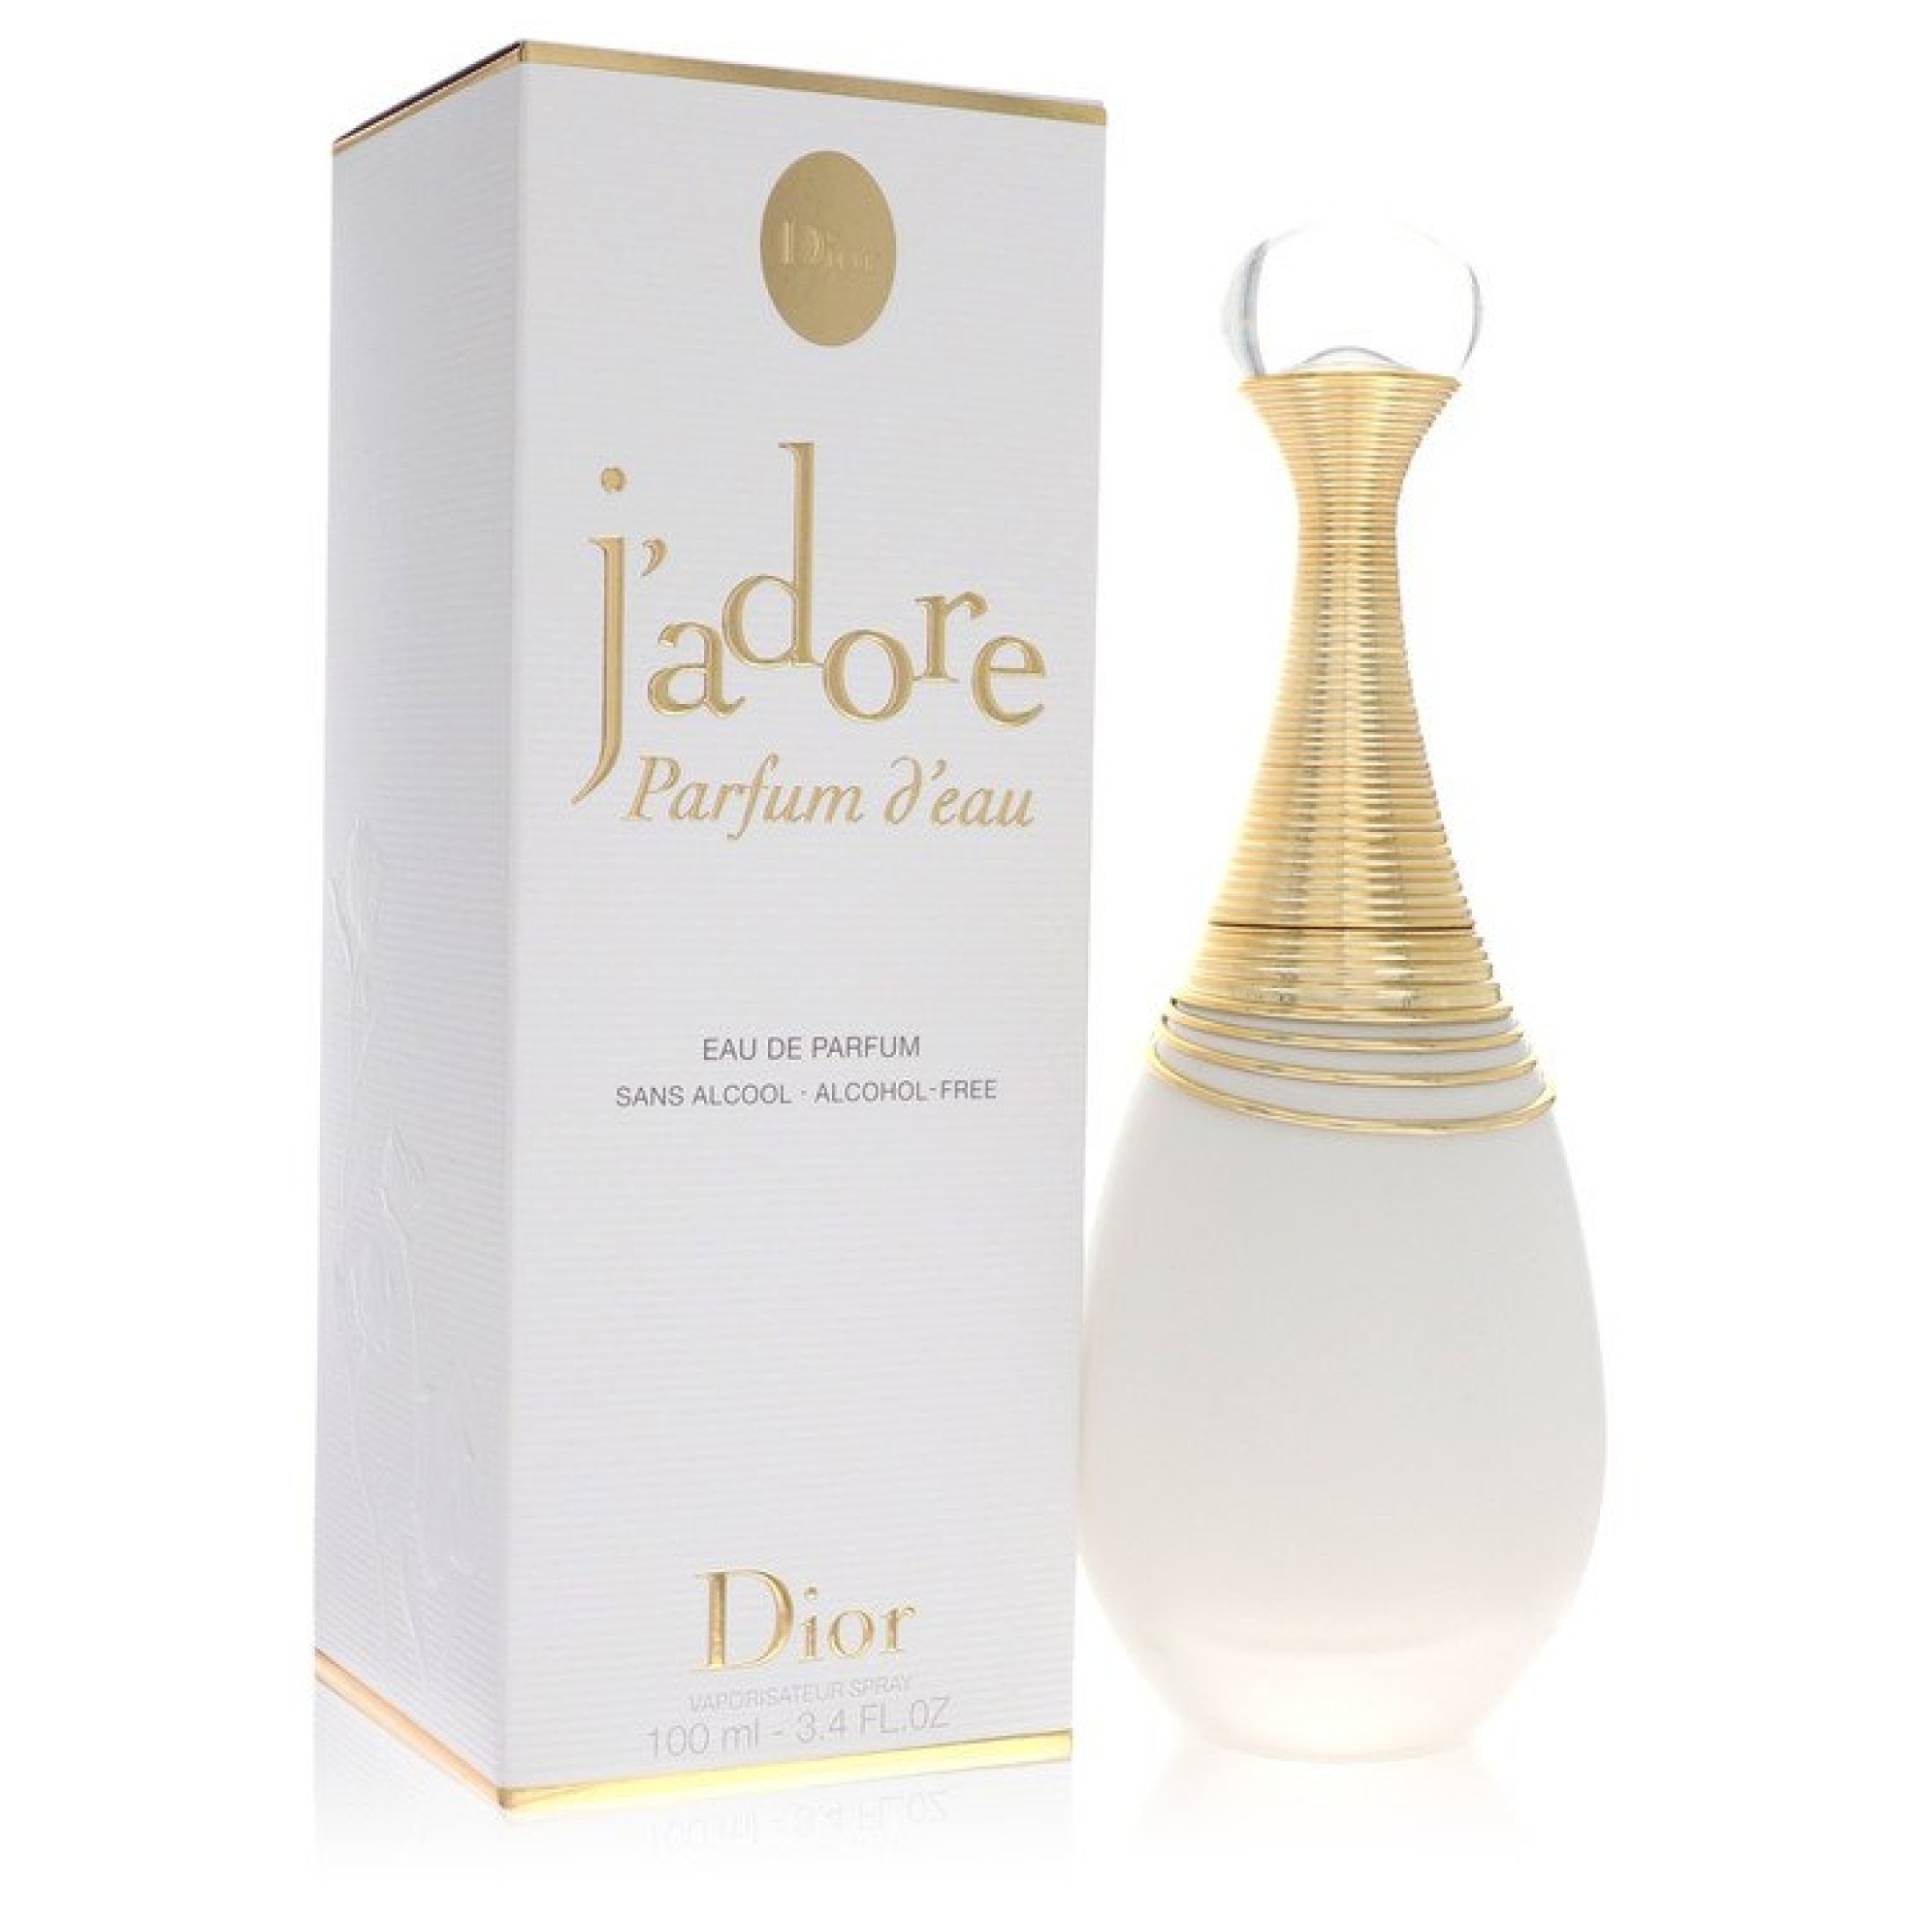 Christian Dior Jadore Parfum D'eau Eau De Parfum Spray 101 ml von Christian Dior